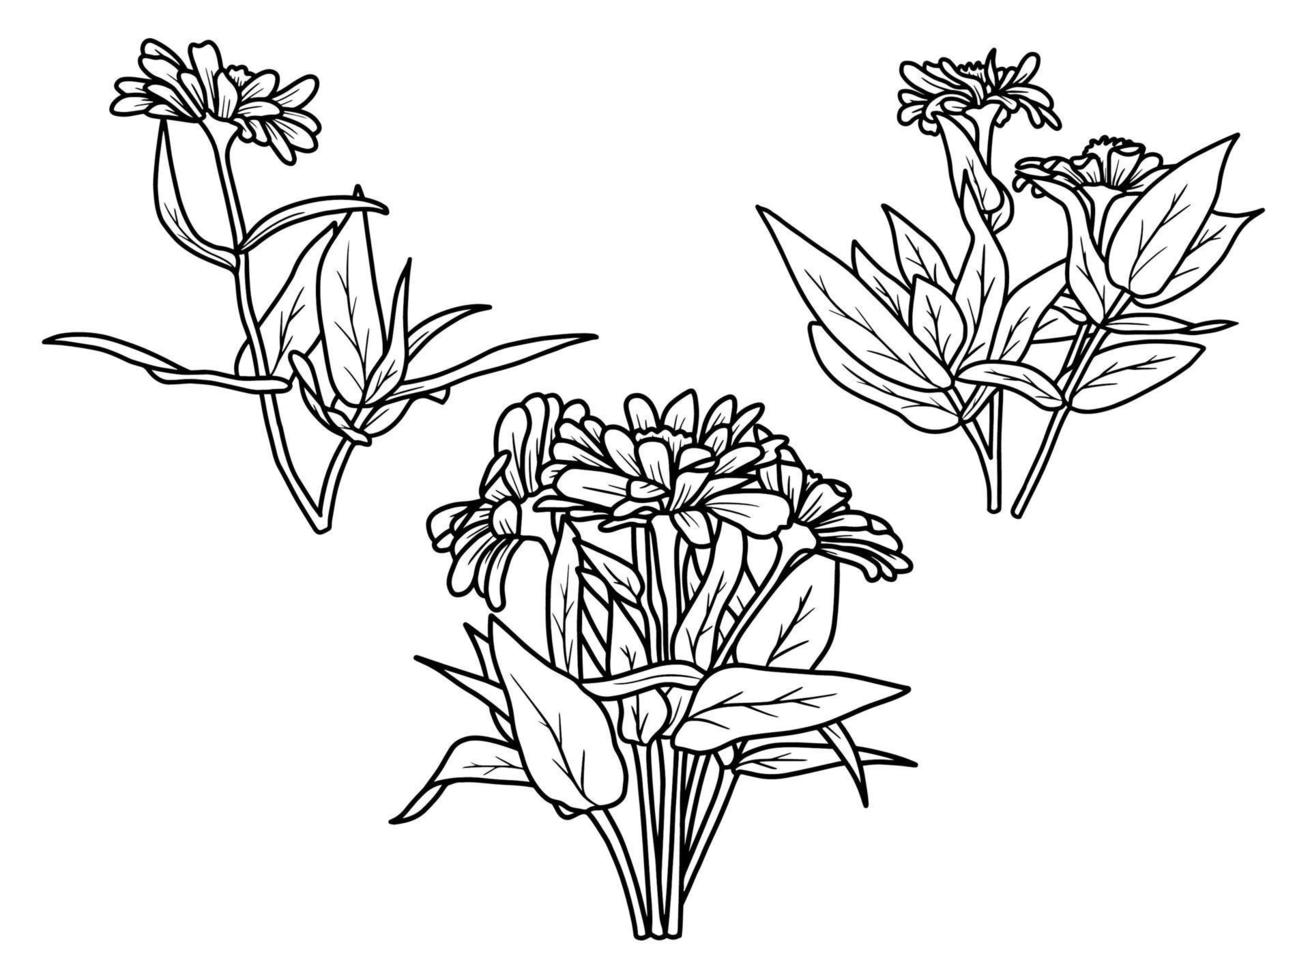 blommor linje konst aarangement vektor